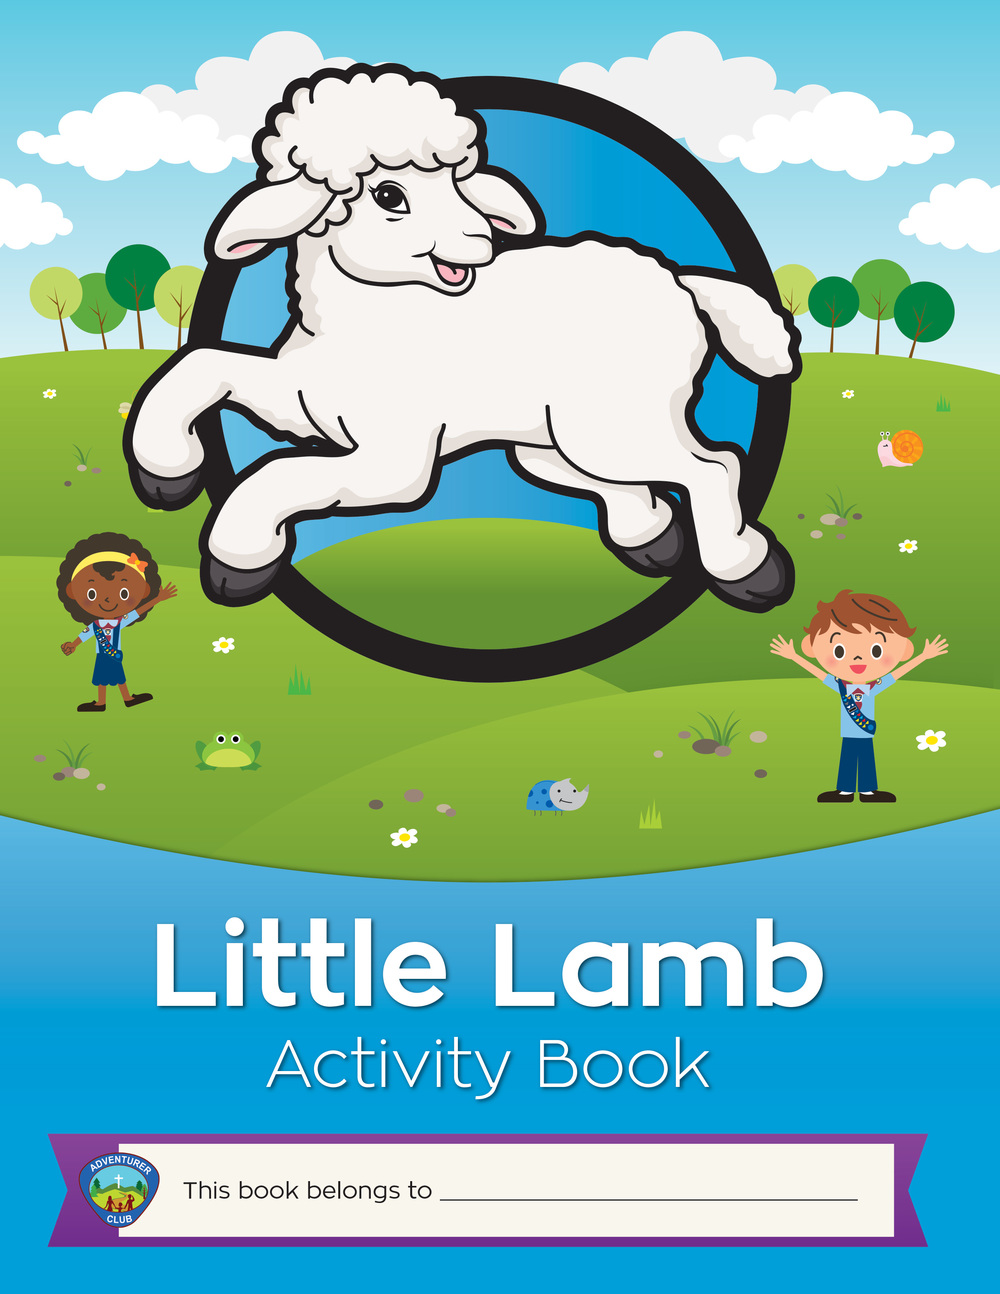 Little Lamb Activity Book